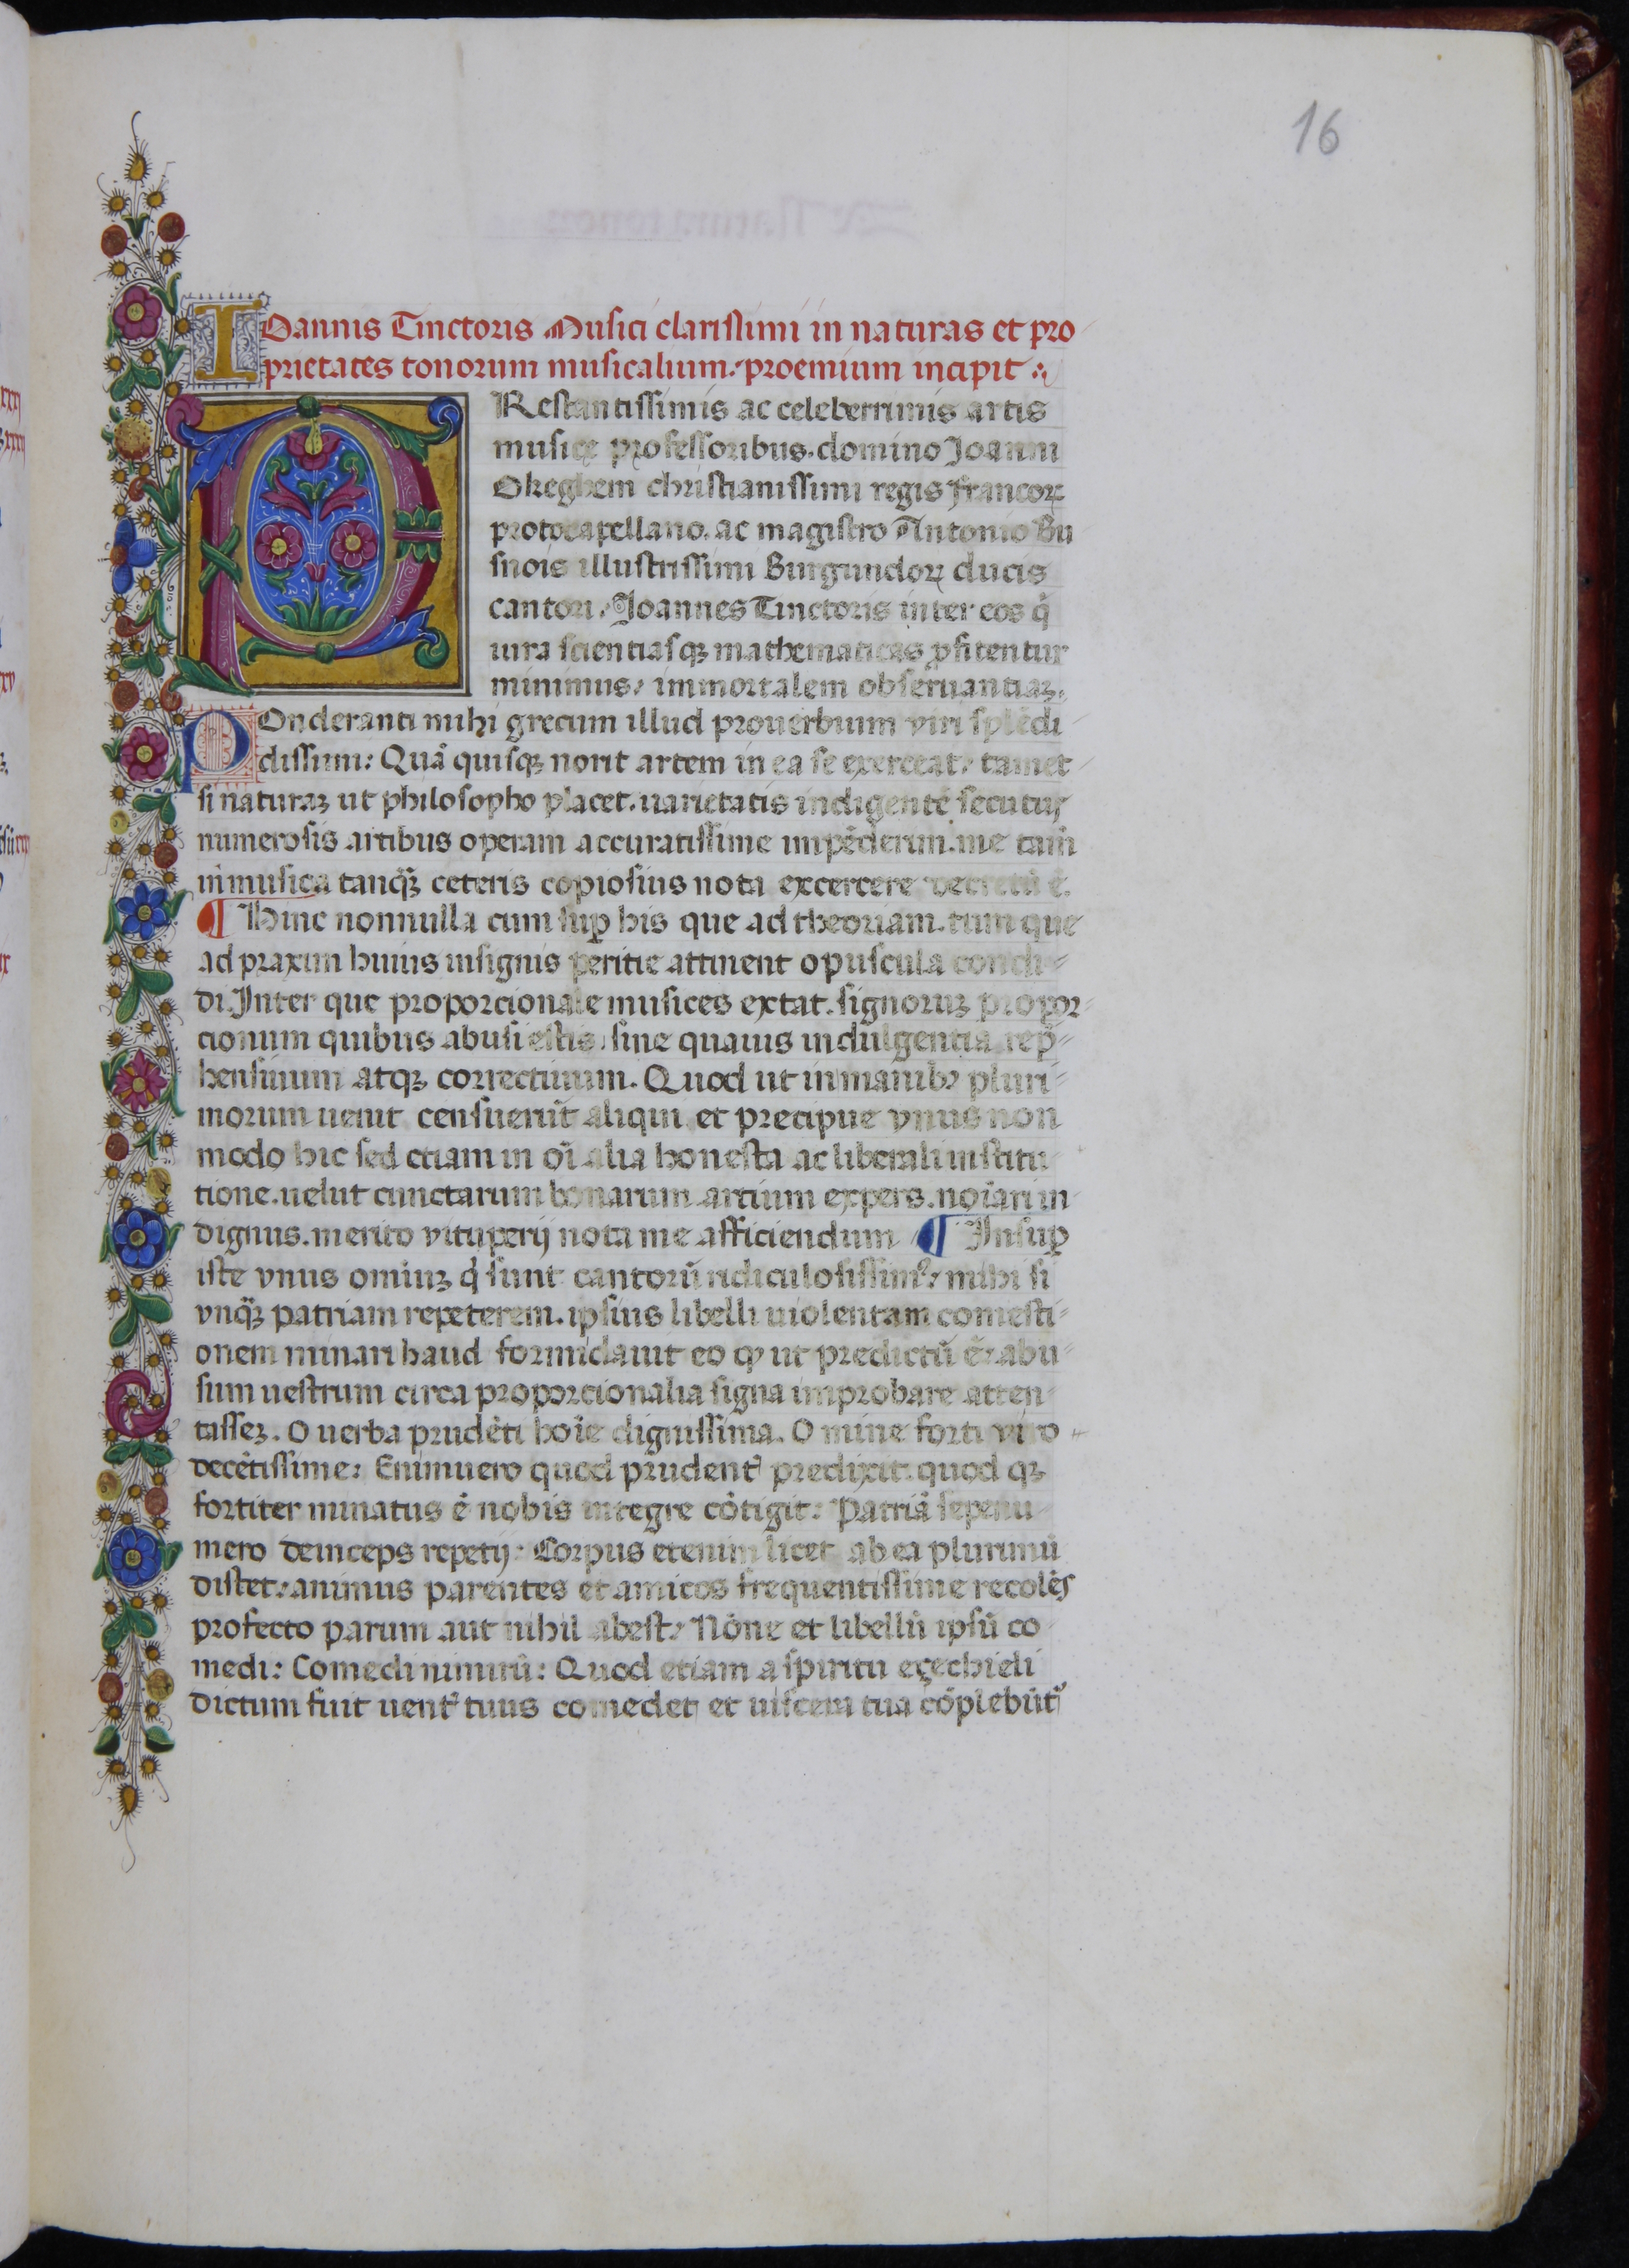 Universitat de València, Biblioteca Històrica, MS 835 [olim 844], fol. 16r. Source: Universitat de València, Biblioteca Històrica.